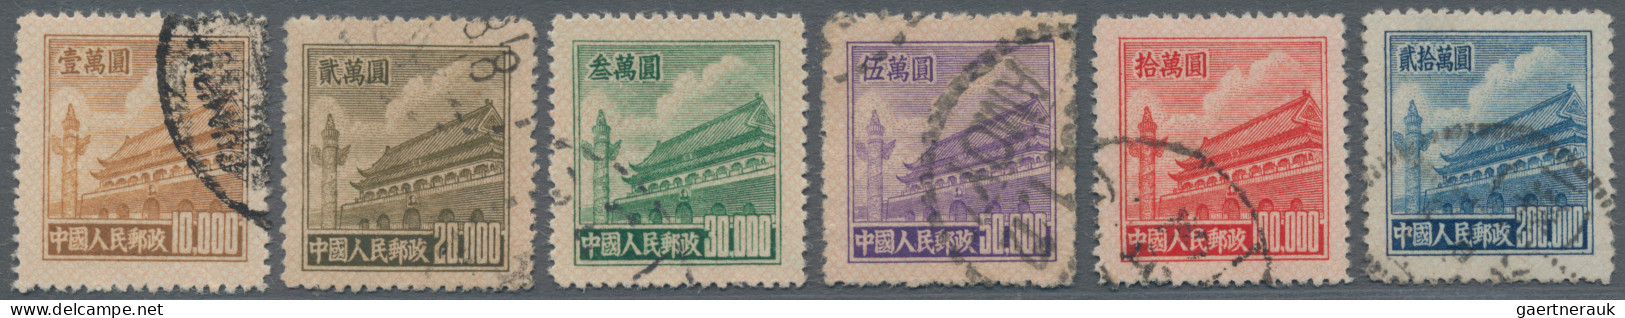 China (PRC): 1951, Tien An Men 5th Issue Set (R5), Used, $200.000 Slight Corner - Usati